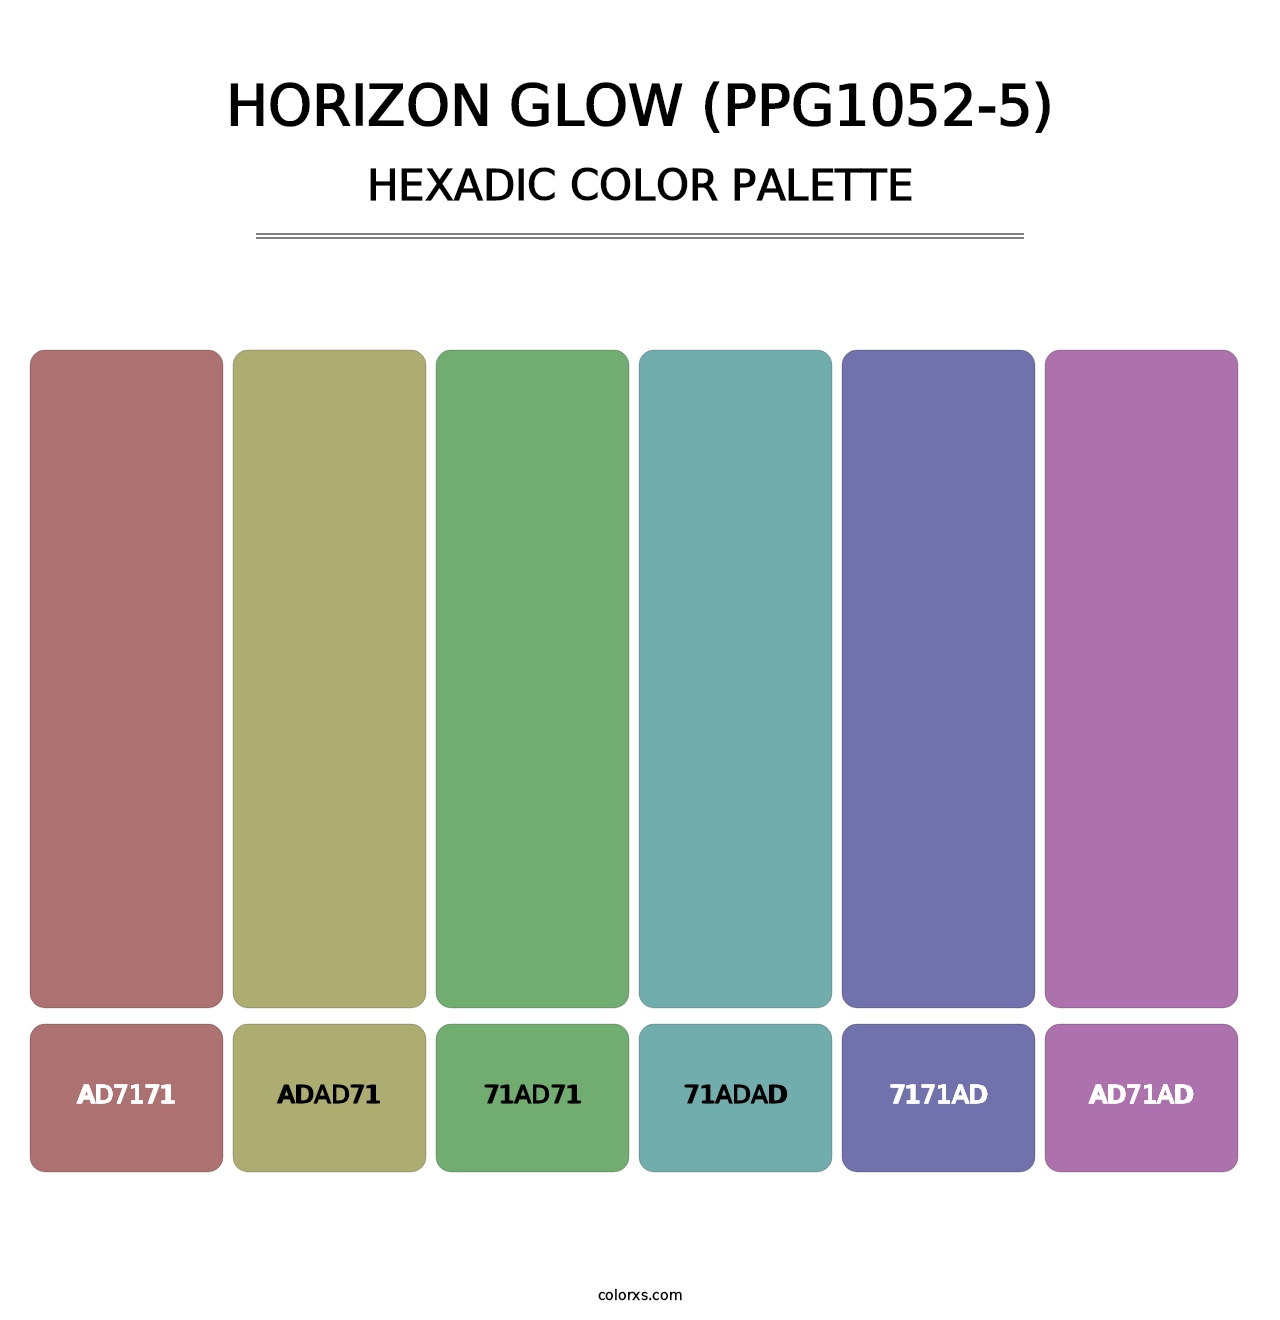 Horizon Glow (PPG1052-5) - Hexadic Color Palette